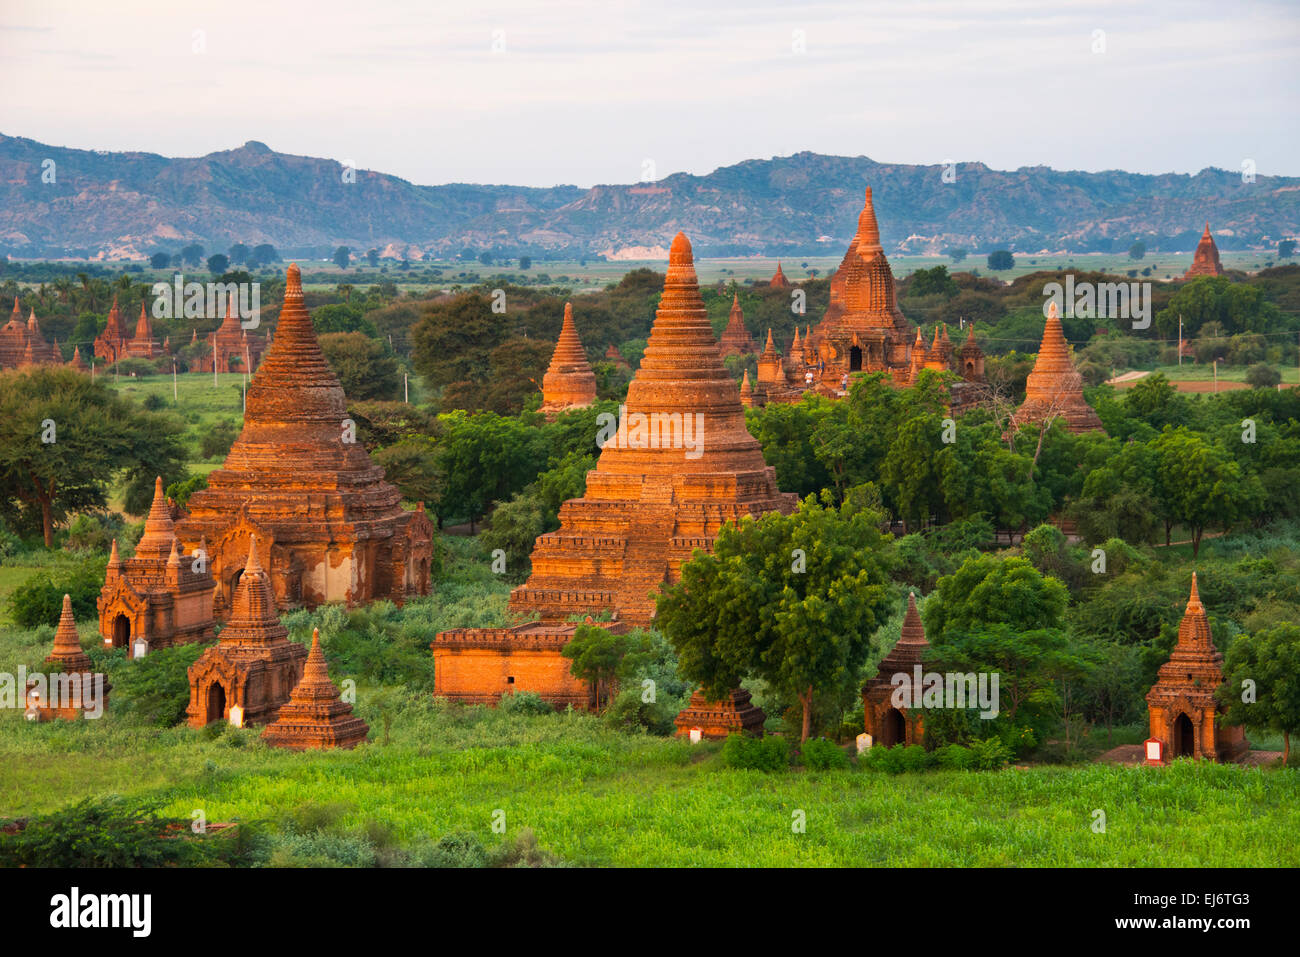 Antike Tempel und Pagoden steigt aus dem Dschungel bei Sonnenaufgang, Bagan, Mandalay Region, Myanmar Stockfoto